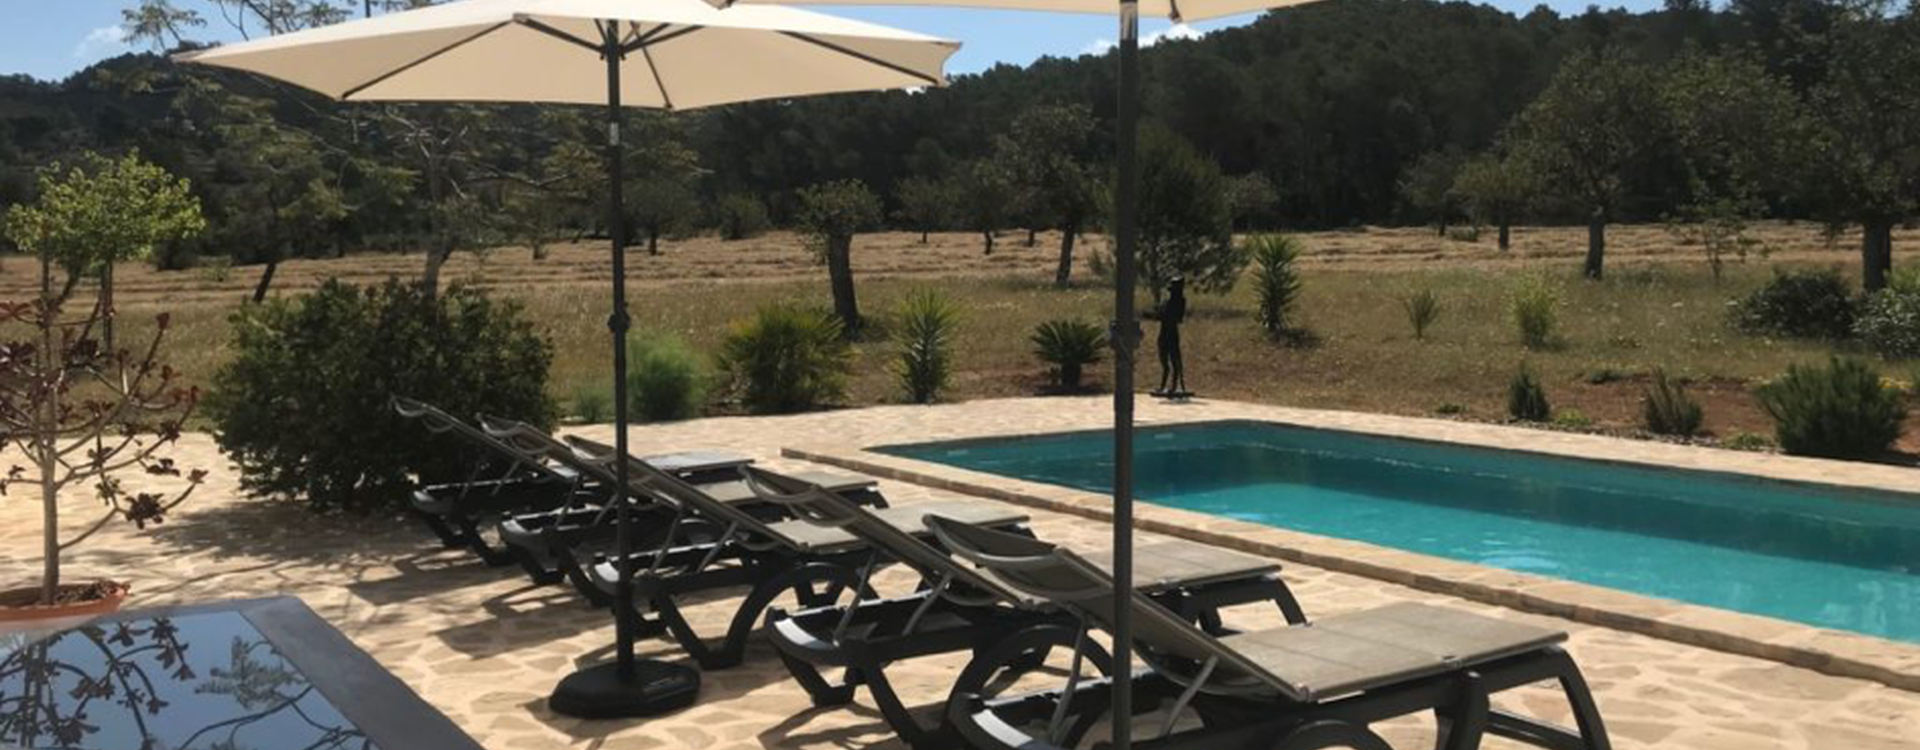 Villa Finca Gertrudis te huur op Ibiza - Zwembad